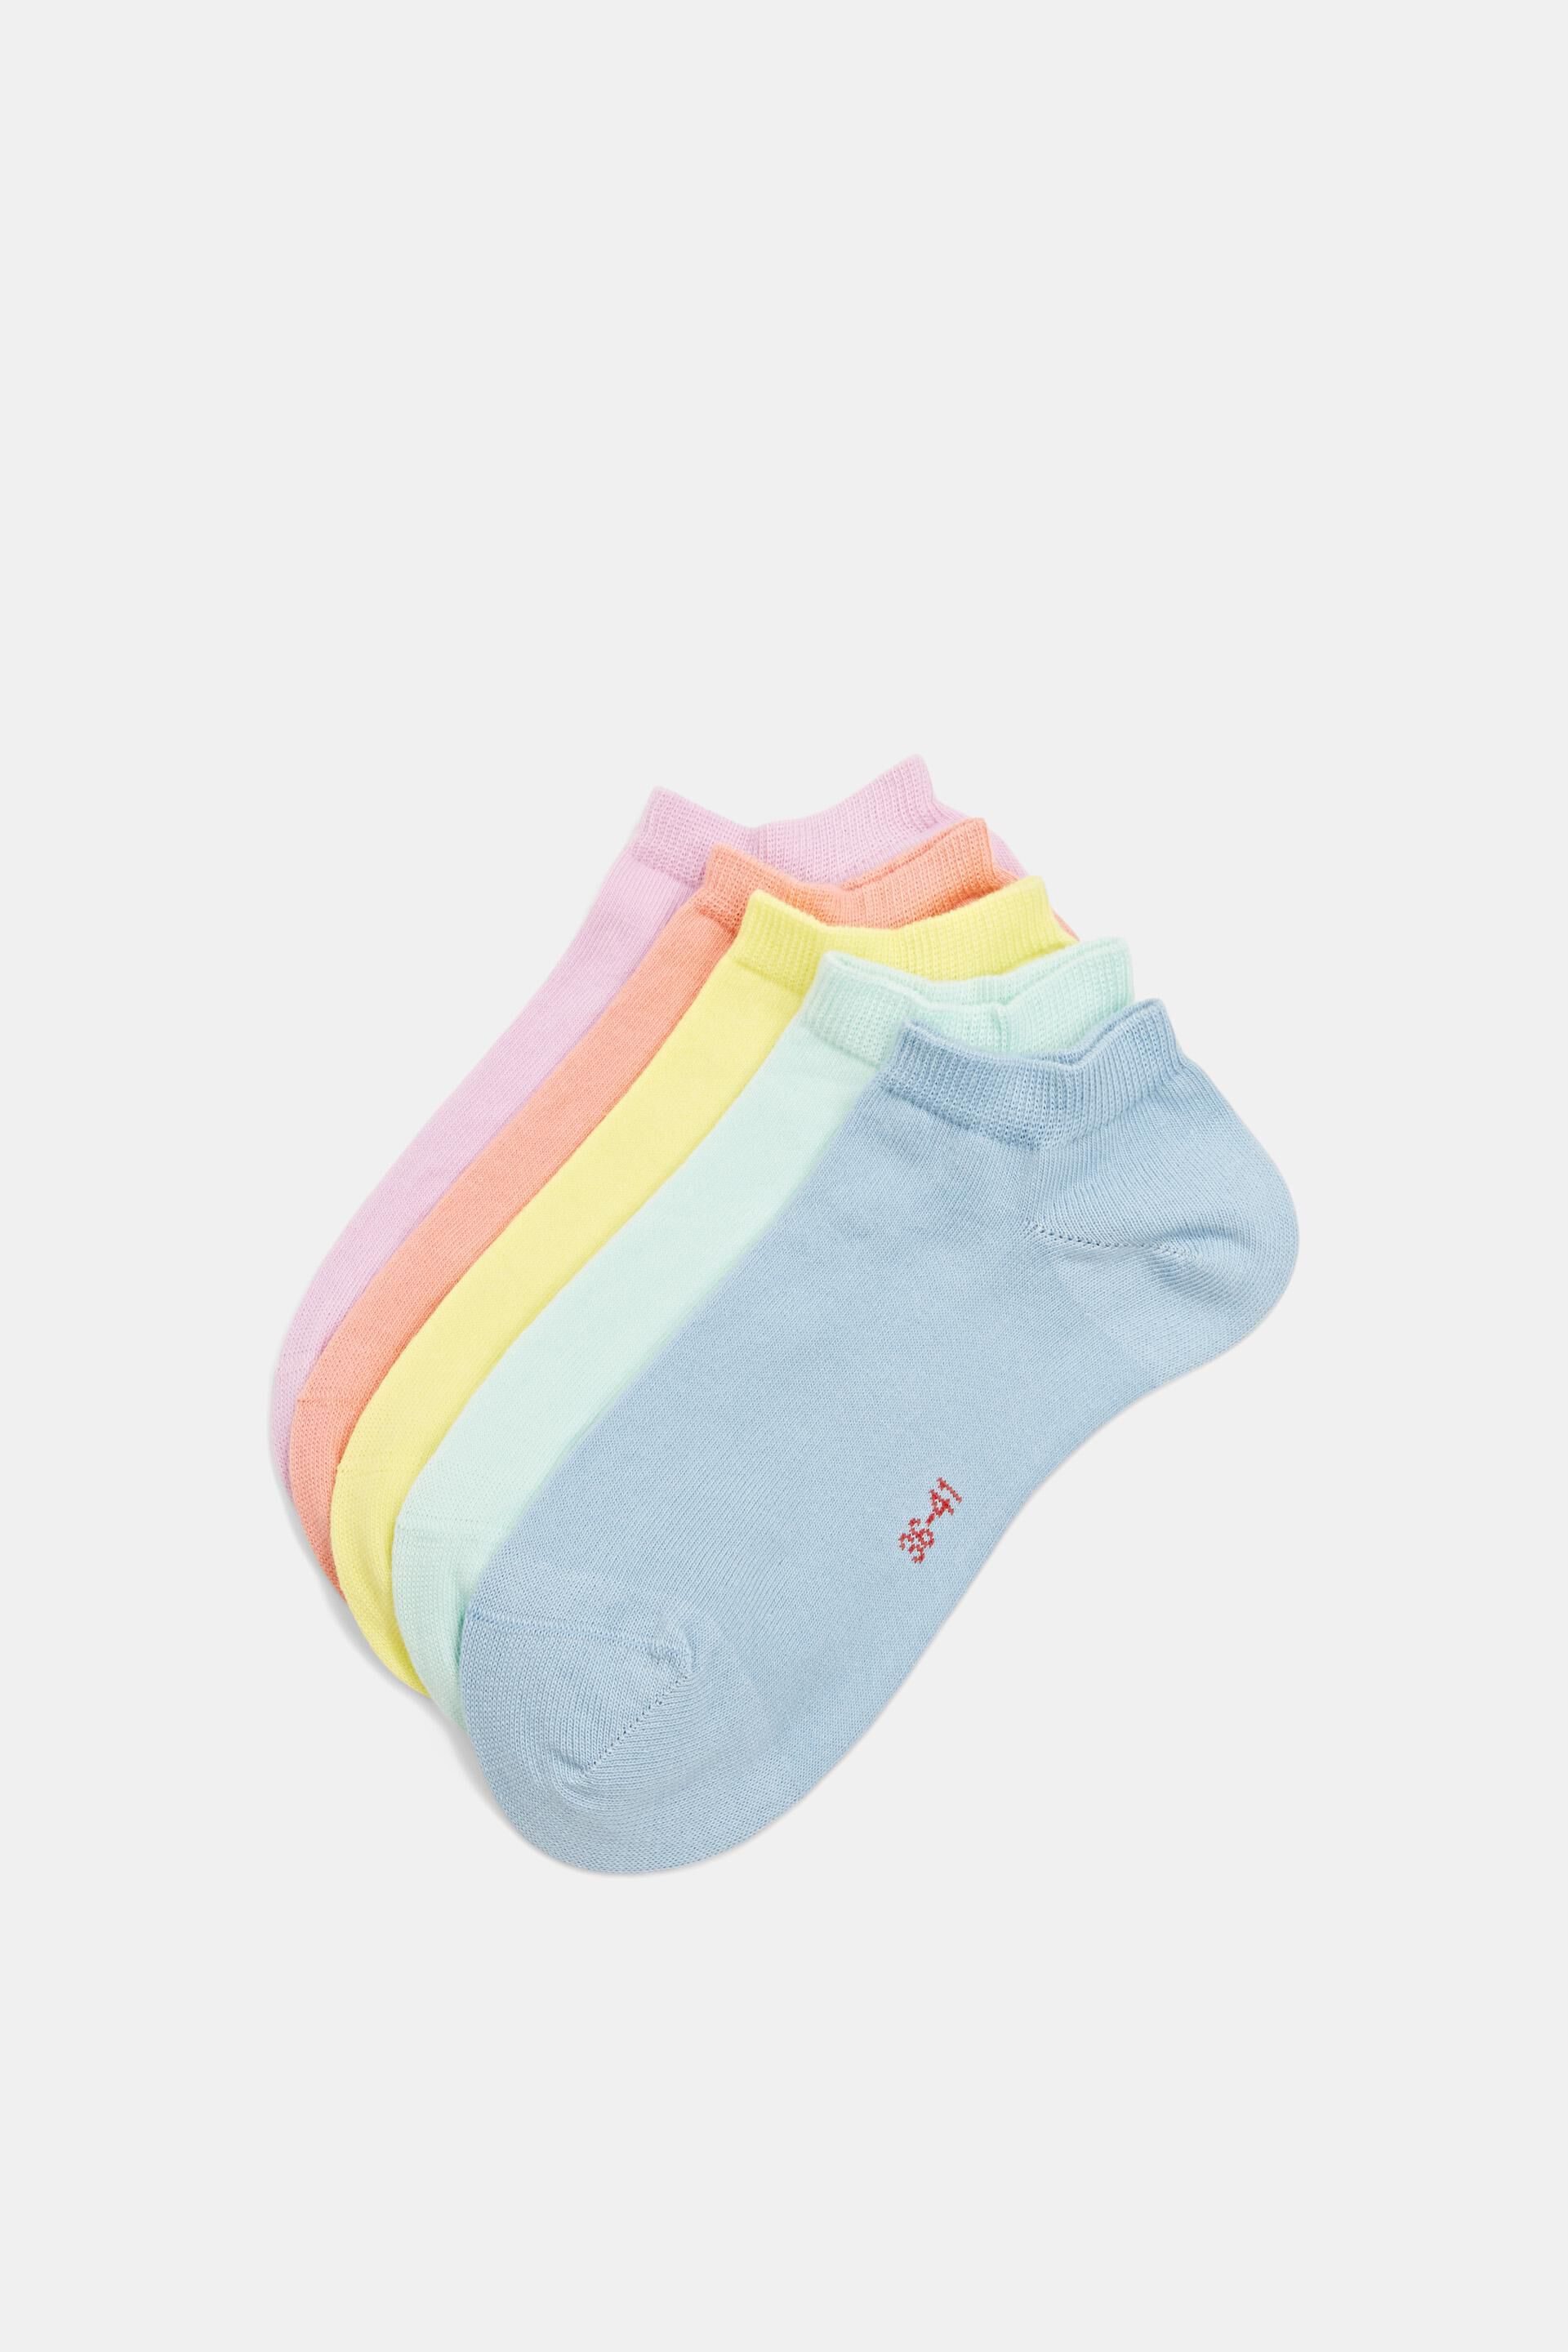 Esprit cotton sneaker socks, blended Five-pack organic of